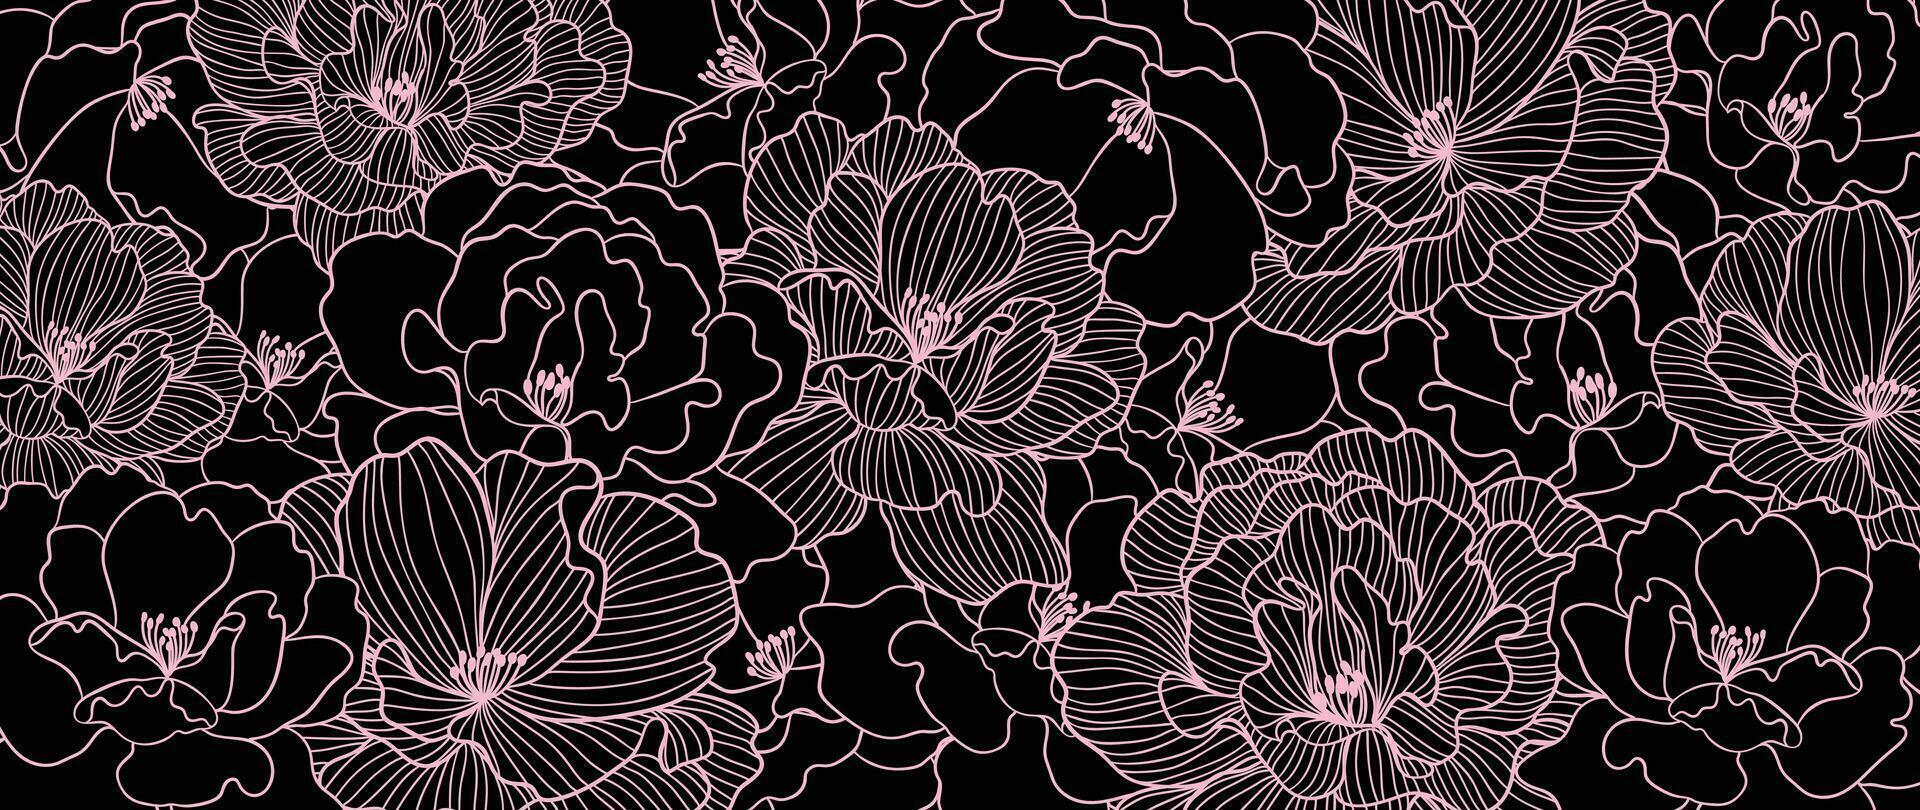 abstrakt pion blomma linje konst bakgrund vektor. naturlig botanisk elegant blomma med rosa linje konst. design illustration för dekoration, vägg dekor, tapet, omslag, baner, affisch, kort. vektor